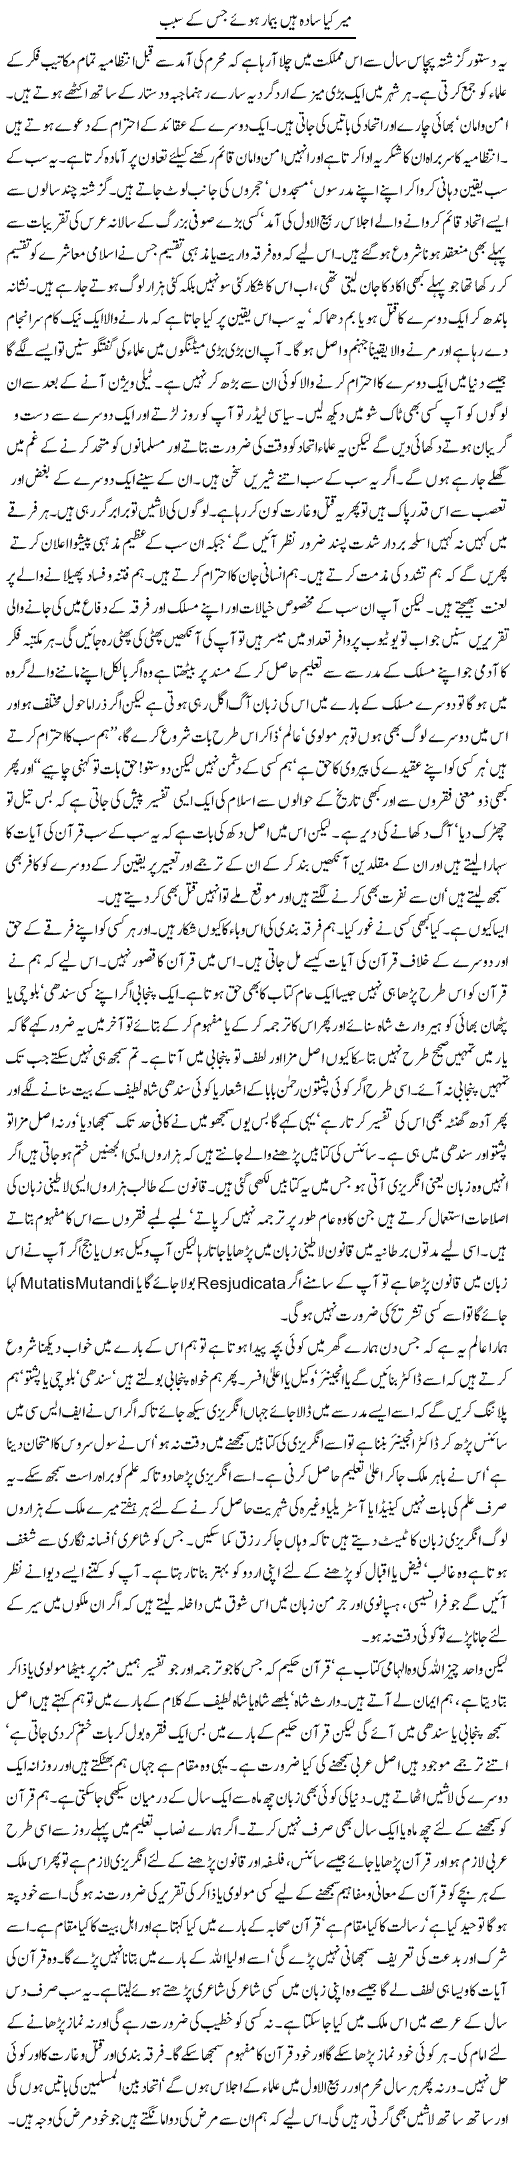 Responsibility of Muslims Express Column Orya Maqbool 3 December 2011